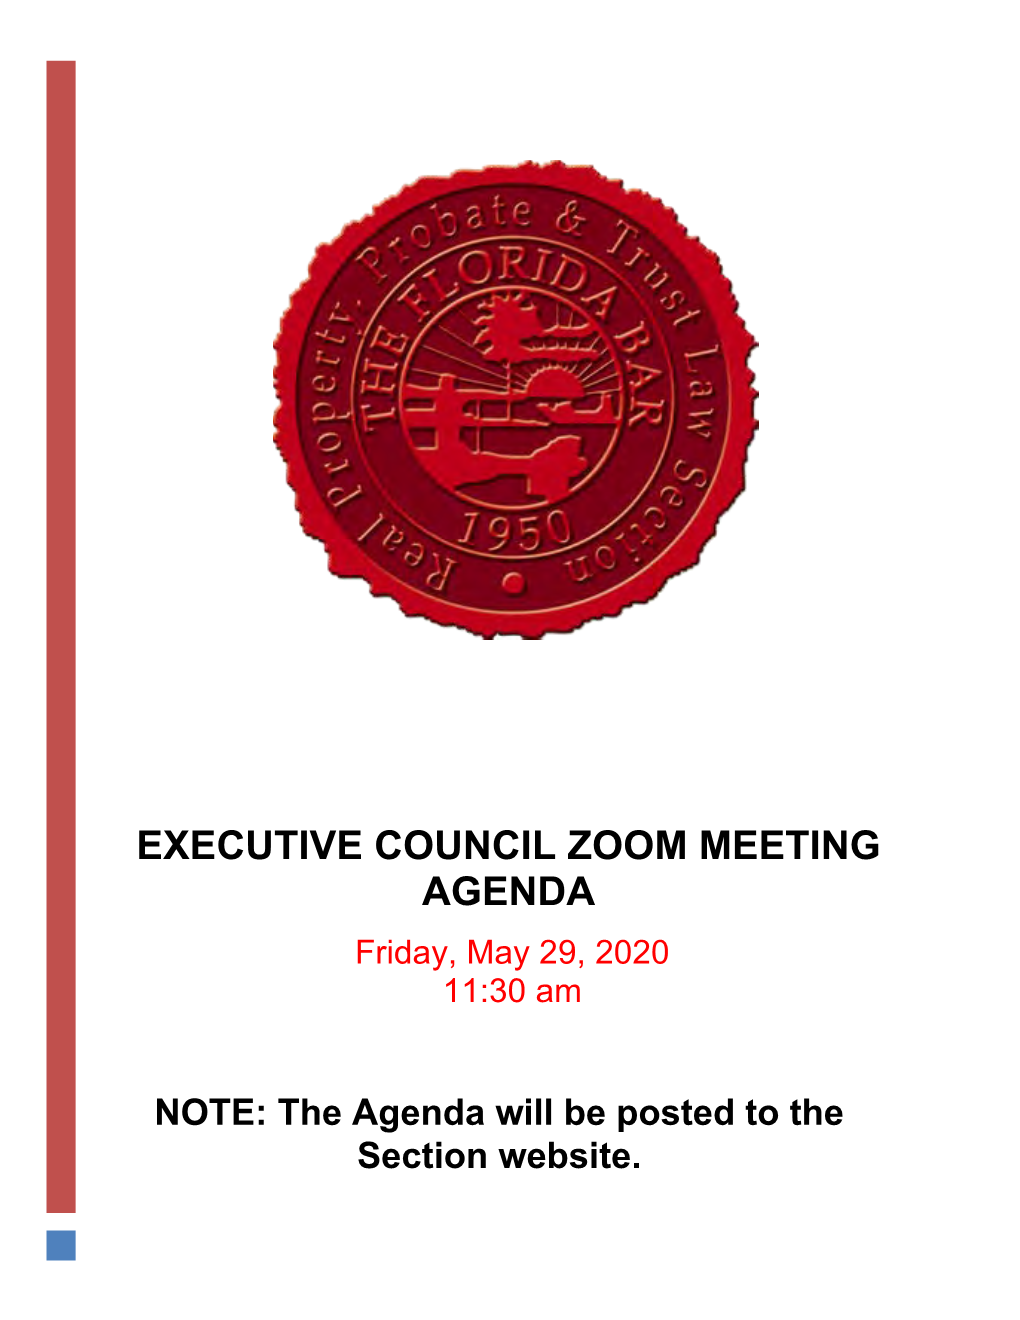 Executive Council Zoom Meeting Agenda